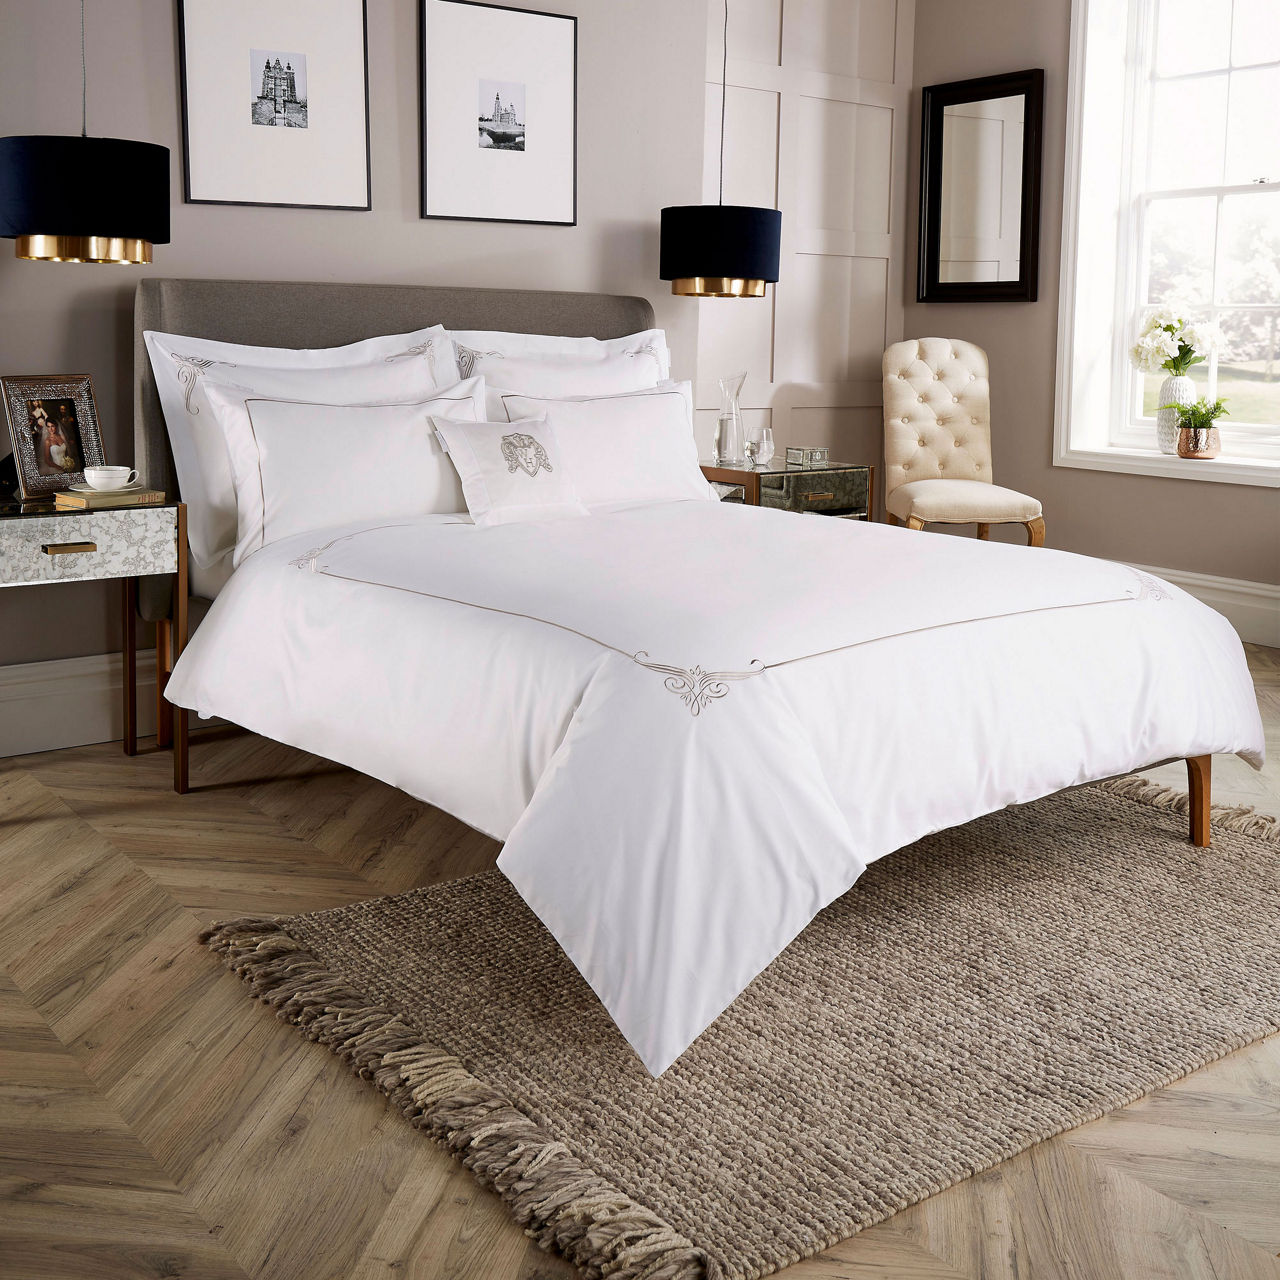 Buy Lips With Louis Vuitton Pattern Bedding Sets Bed Sets, Bedroom Sets, Comforter  Sets, Duvet Cover